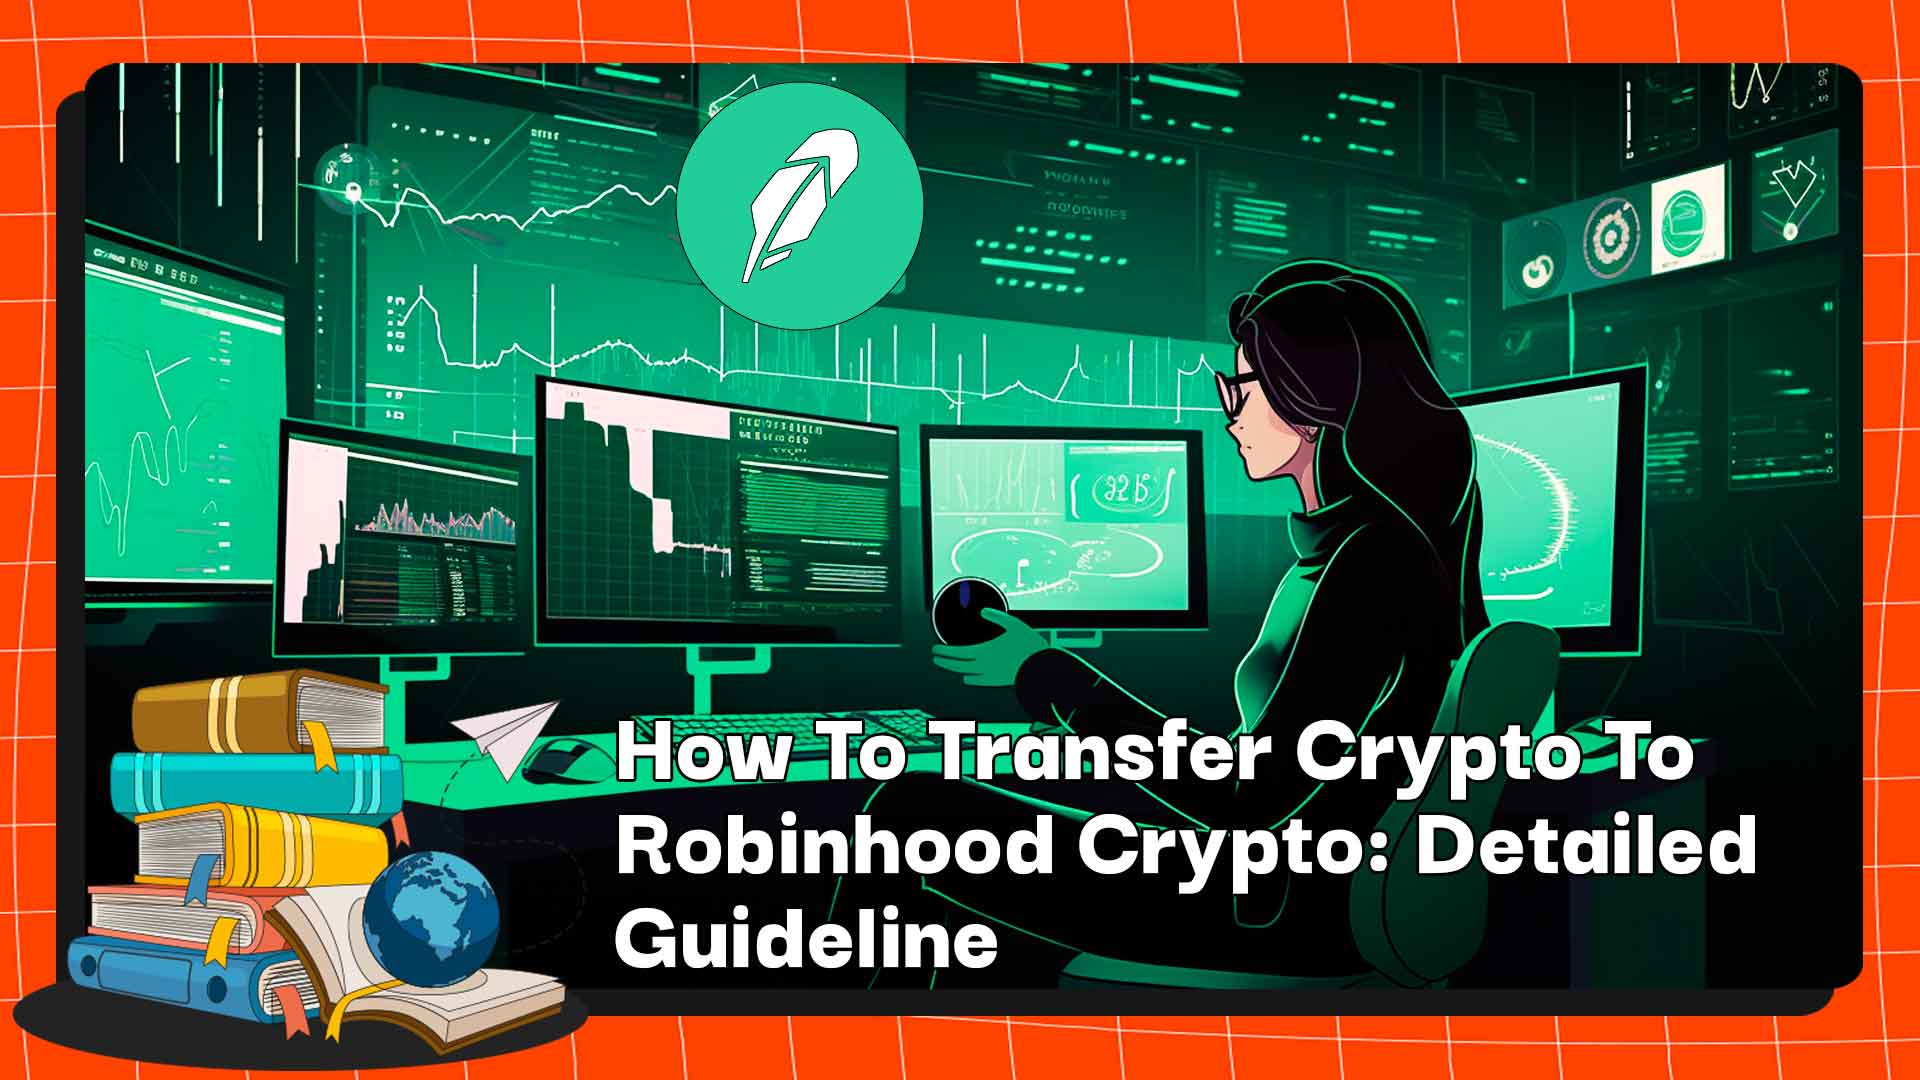 How To Transfer Crypto To Robinhood Crypto: Detailed Guideline